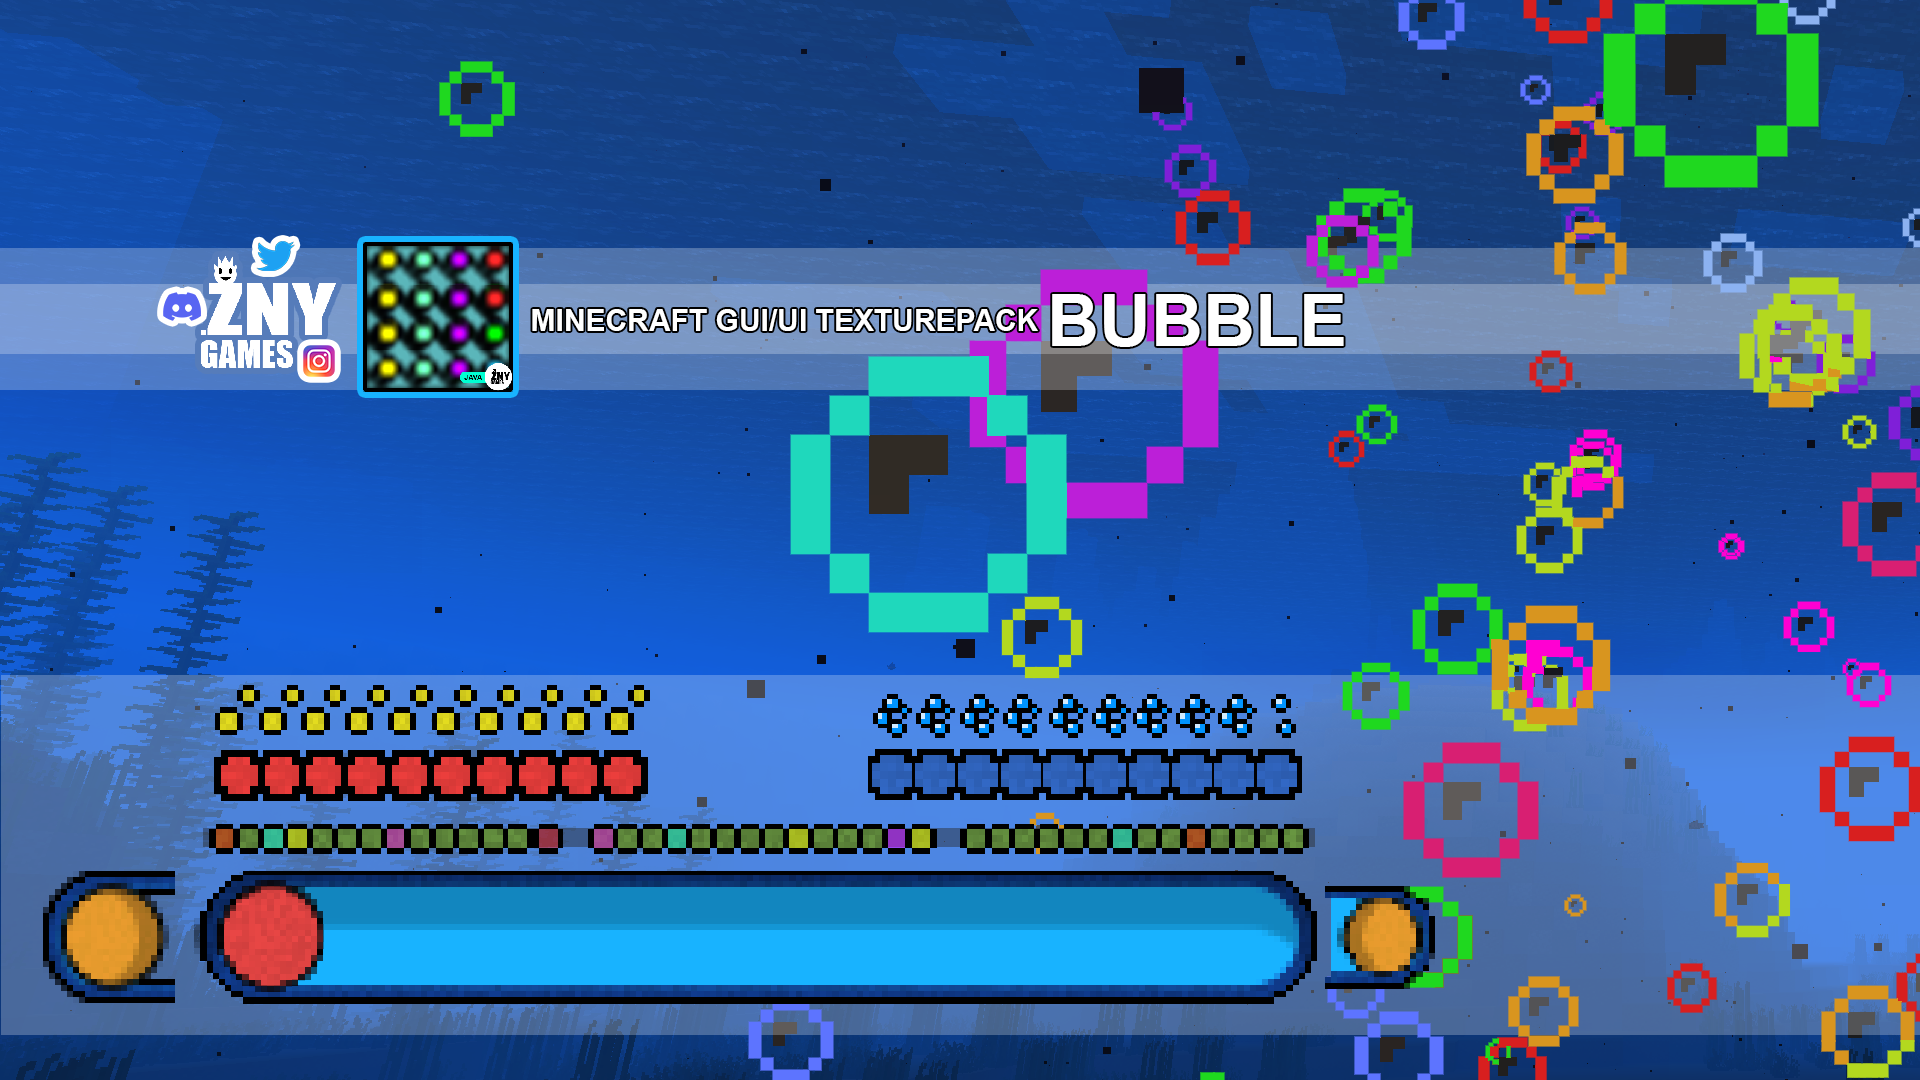 Effects Bubbles Gum  Minecraft PE Mods & Addons